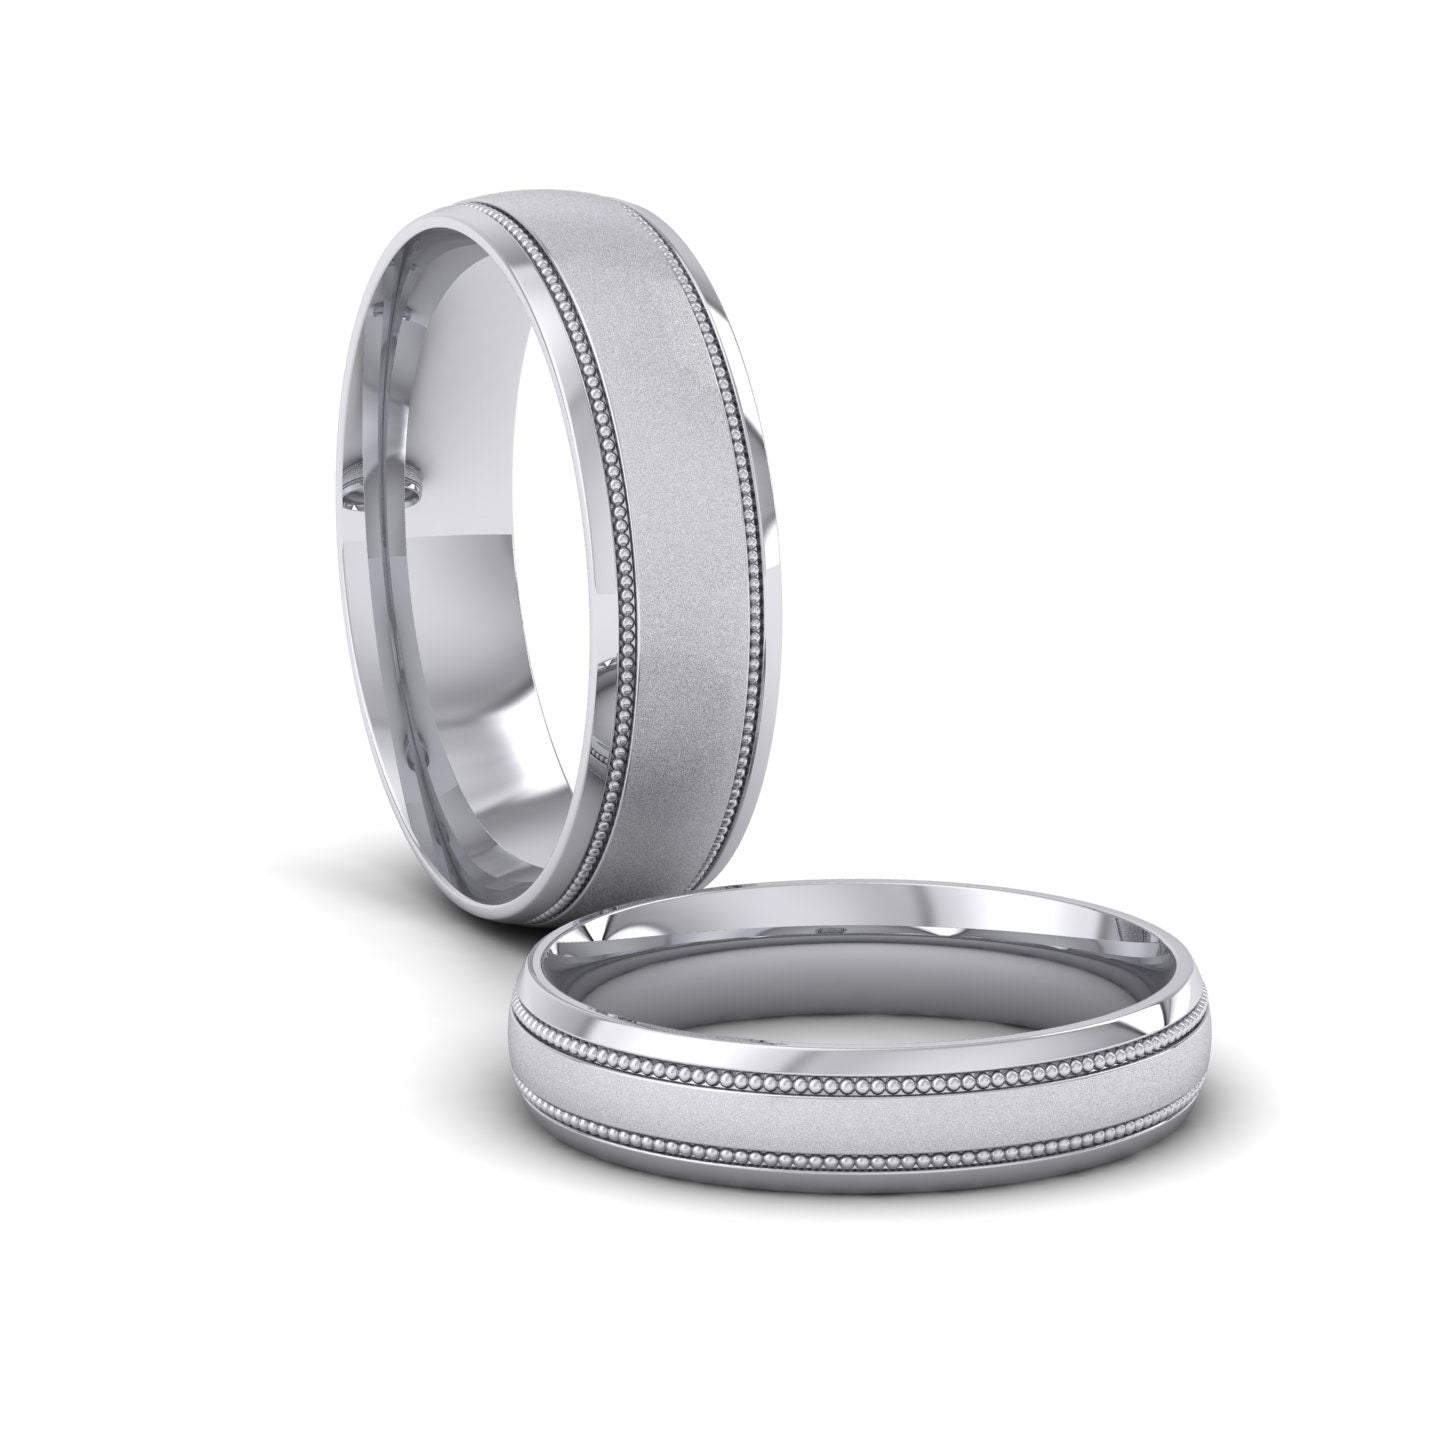 Millgrain And Contrasting Matt And Shiny Finish 500 Palladium 4mm Wedding Ring